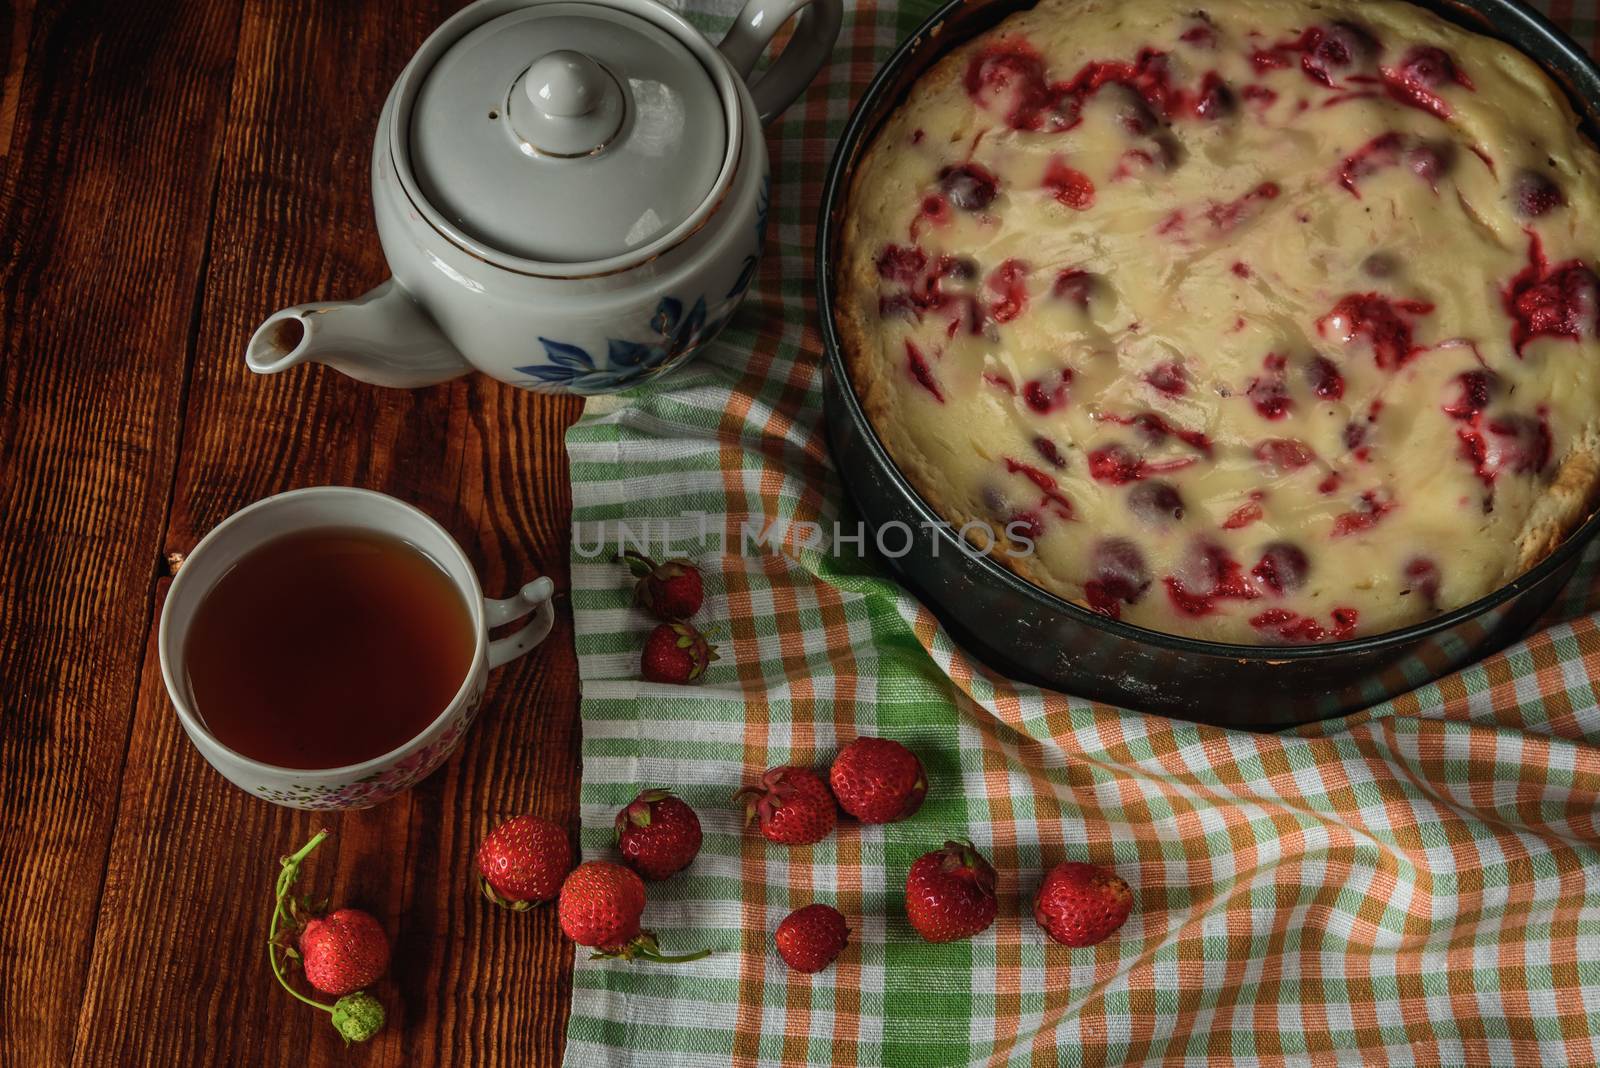 Breakfast with strawberry pie, black tea and berries by Seva_blsv